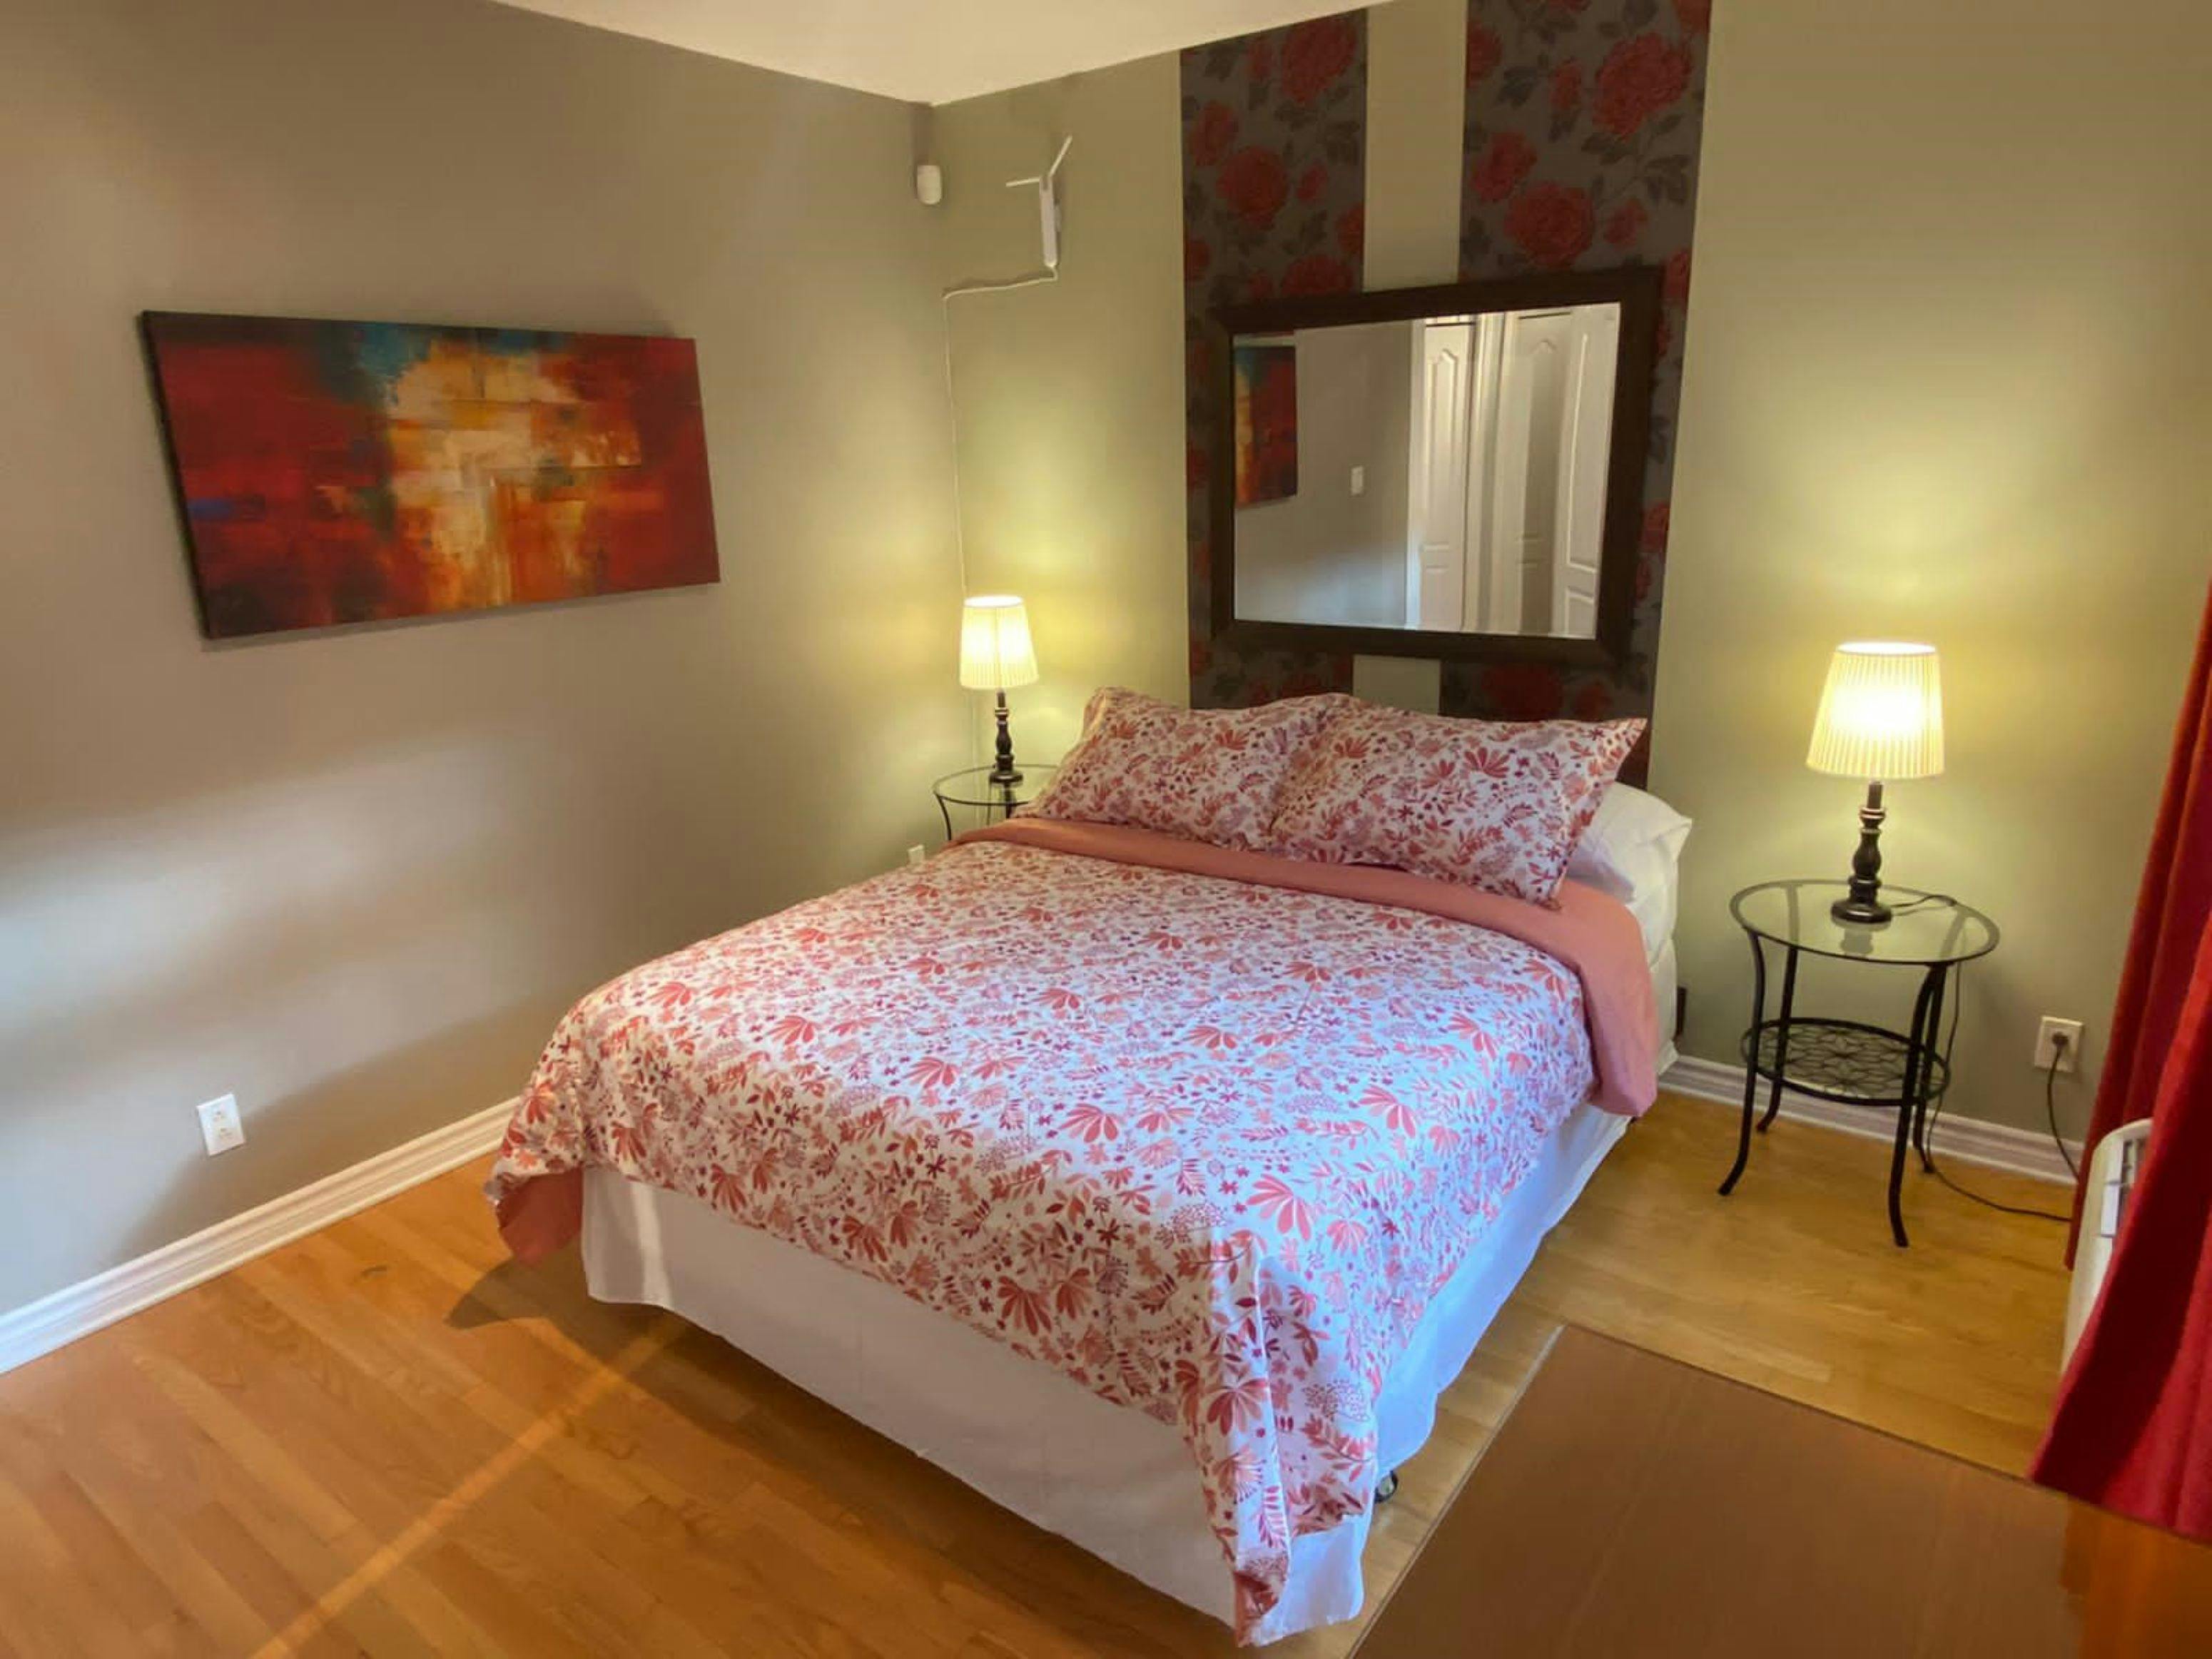 Splendid Suite 304 Apart Hotel Montreal Tourist Residence 222512 2115 Rue Saint Urbain H2X 2N1 #aparthotelmontreal